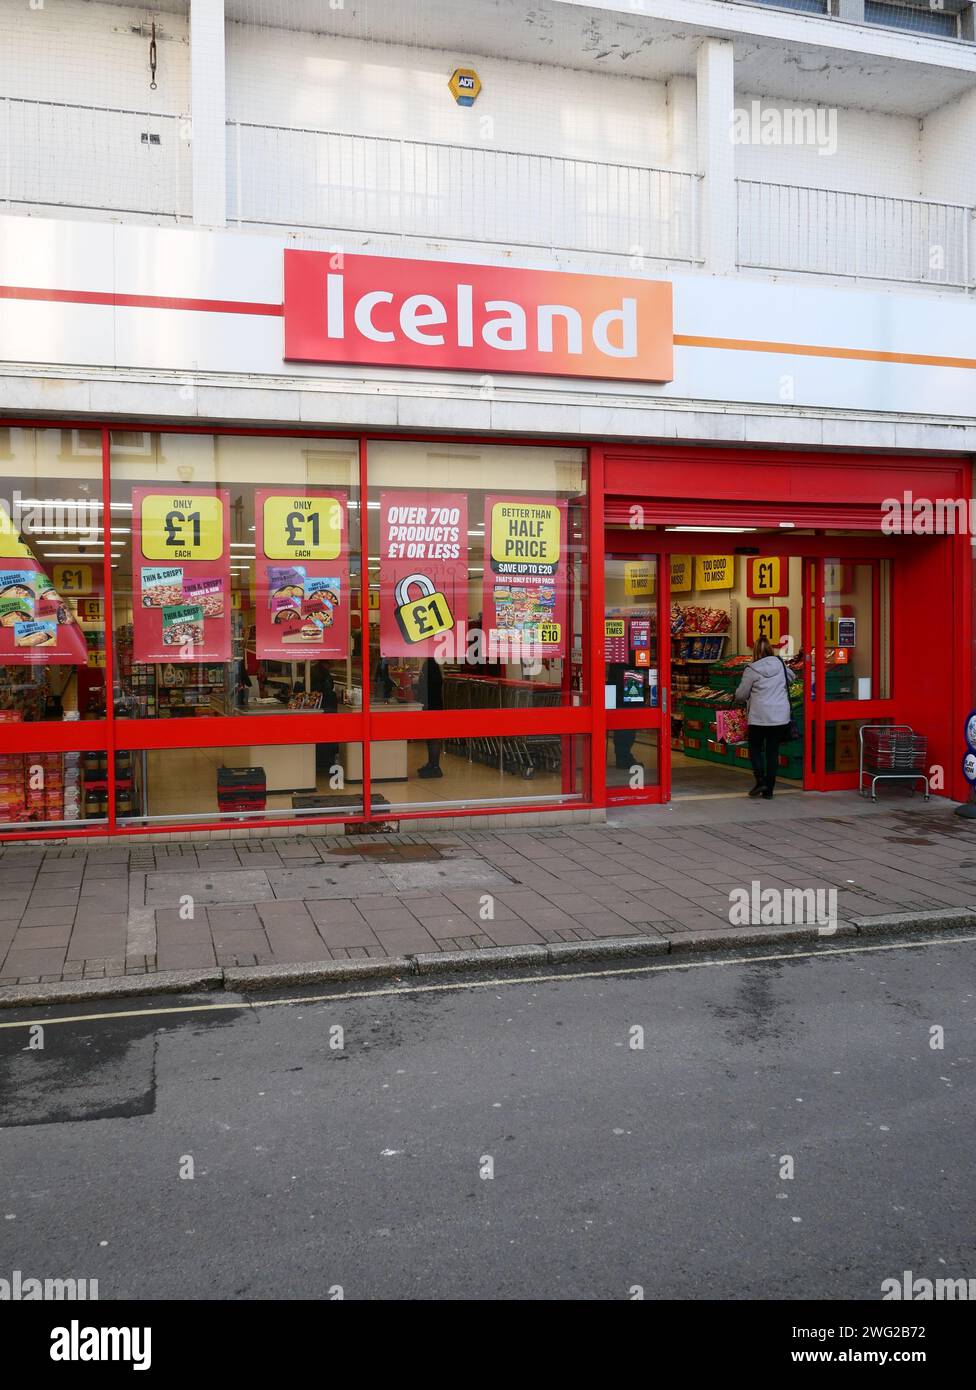 Iceland supermarket on High Street, Barnstaple, Devon, UK Stock Photo